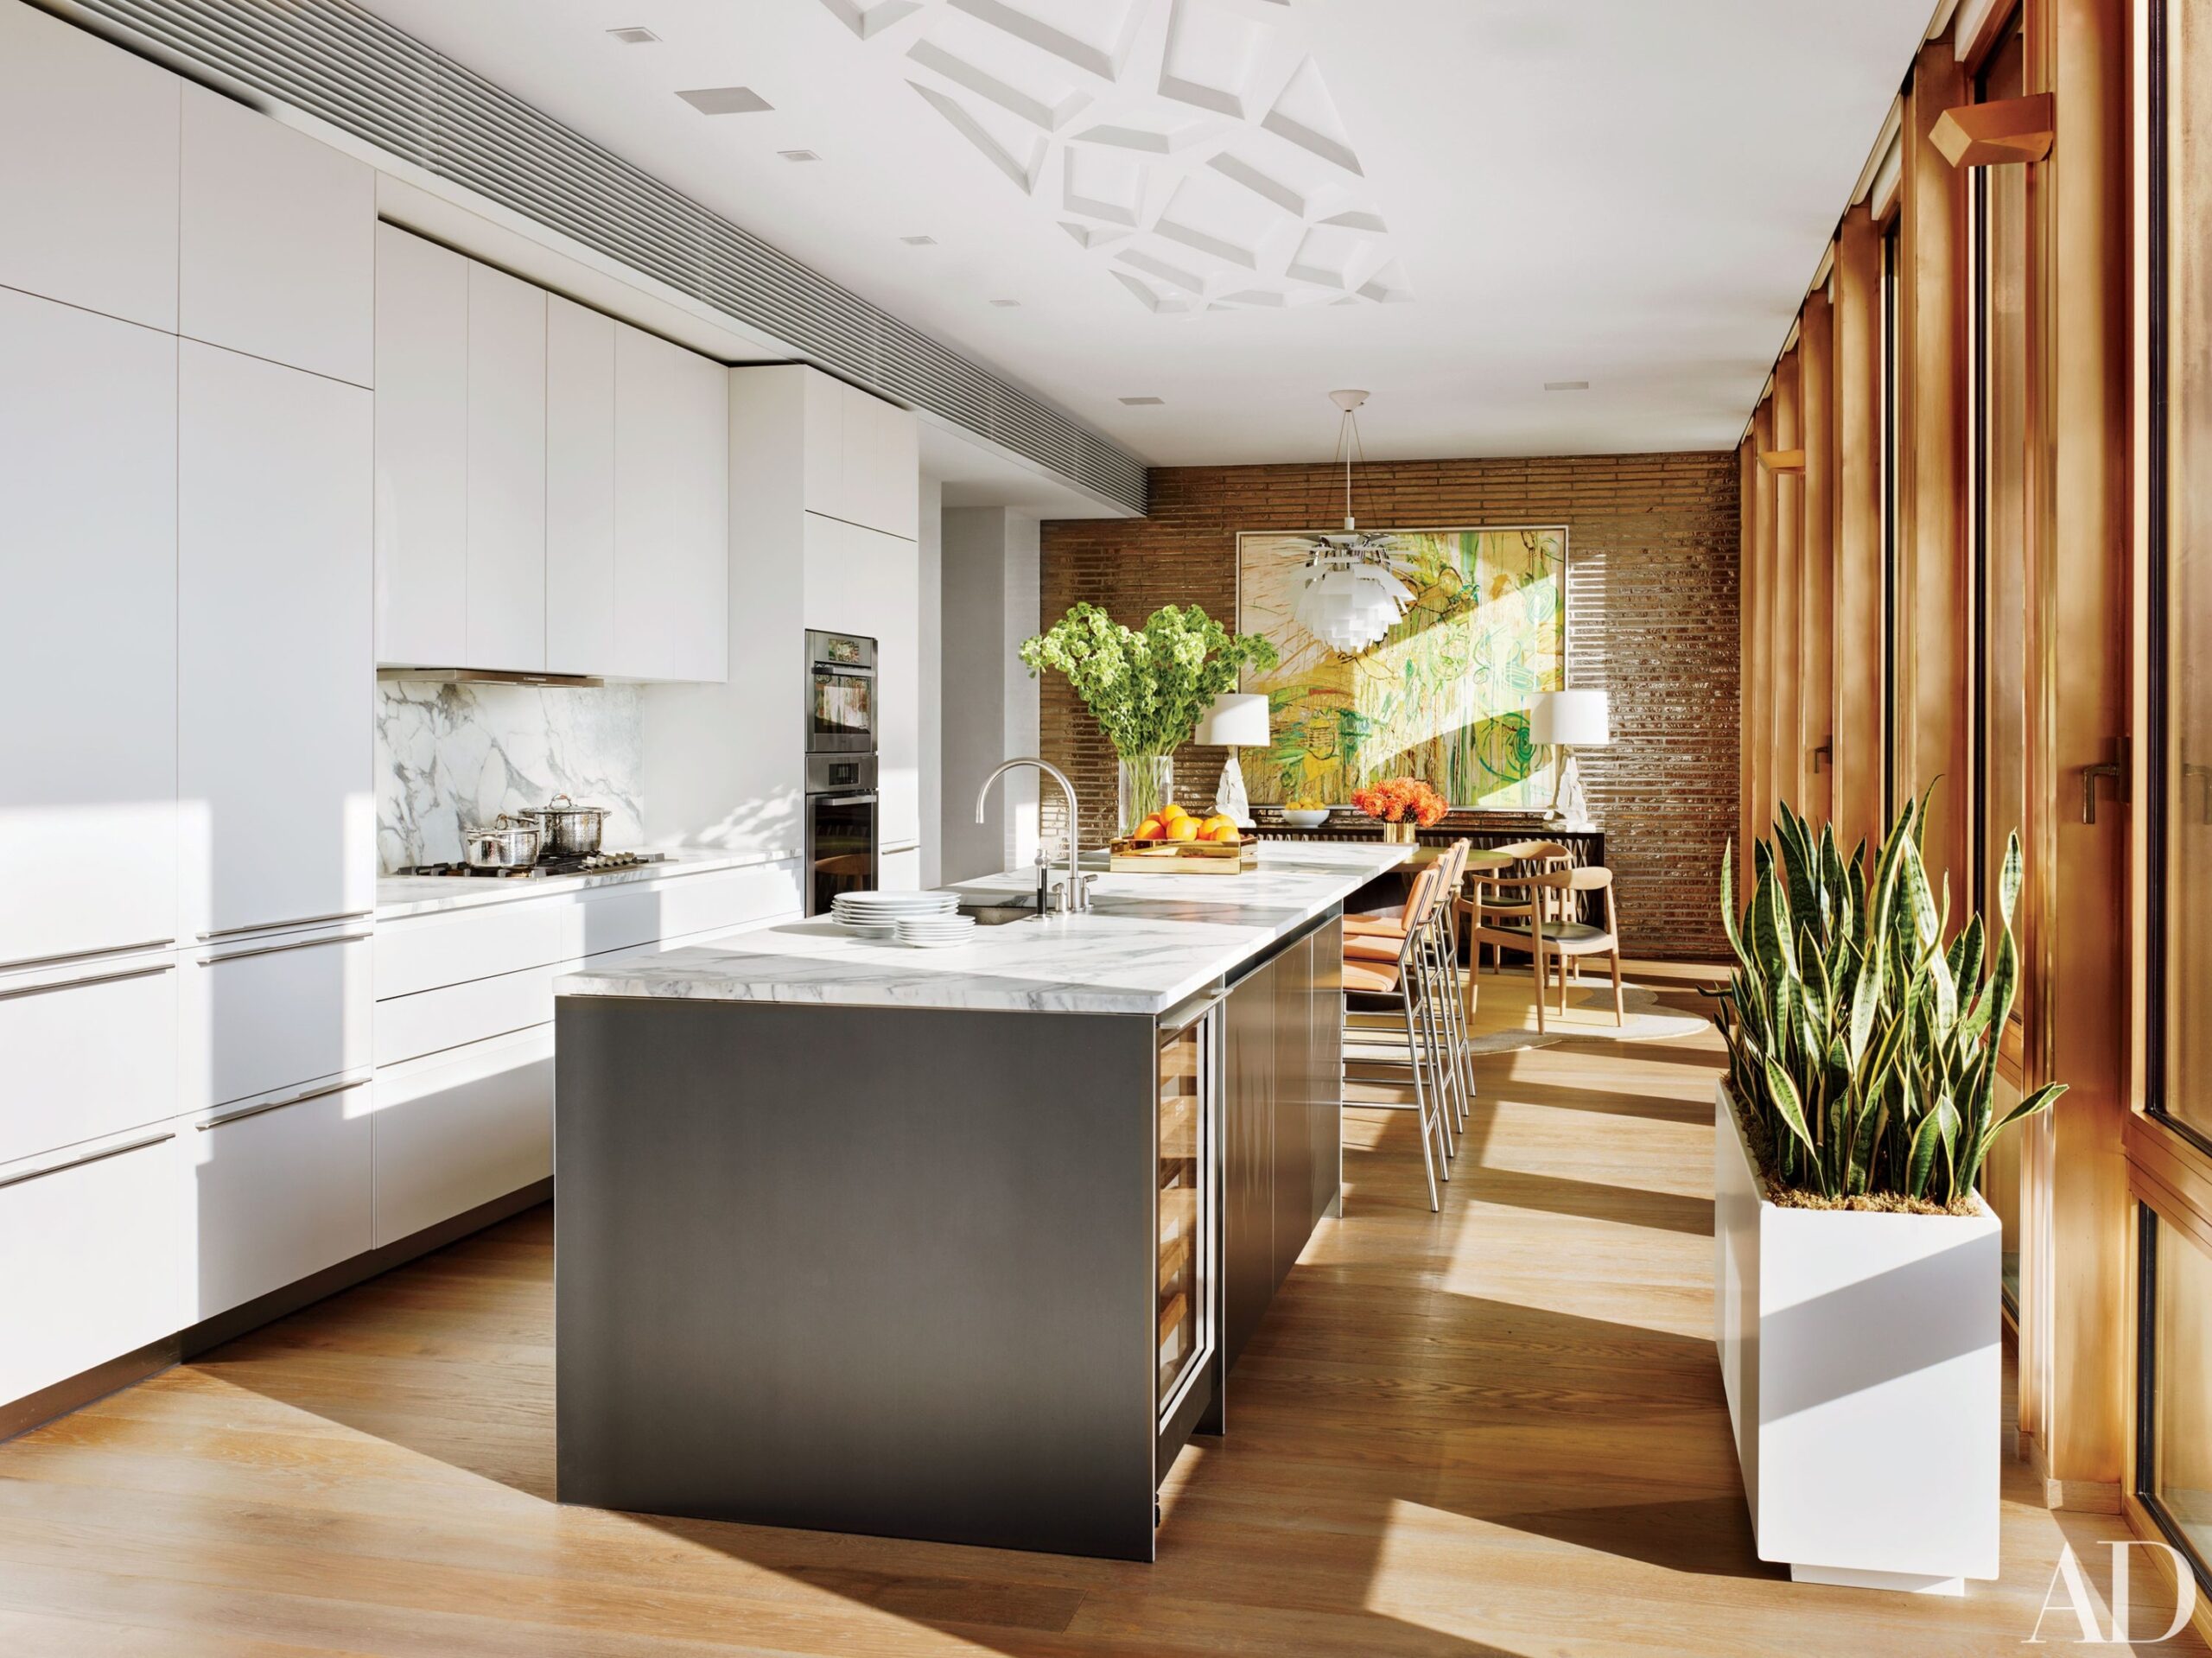 10 Sleek & Inspiring Contemporary Kitchen Design Ideas  - contemporary kitchens